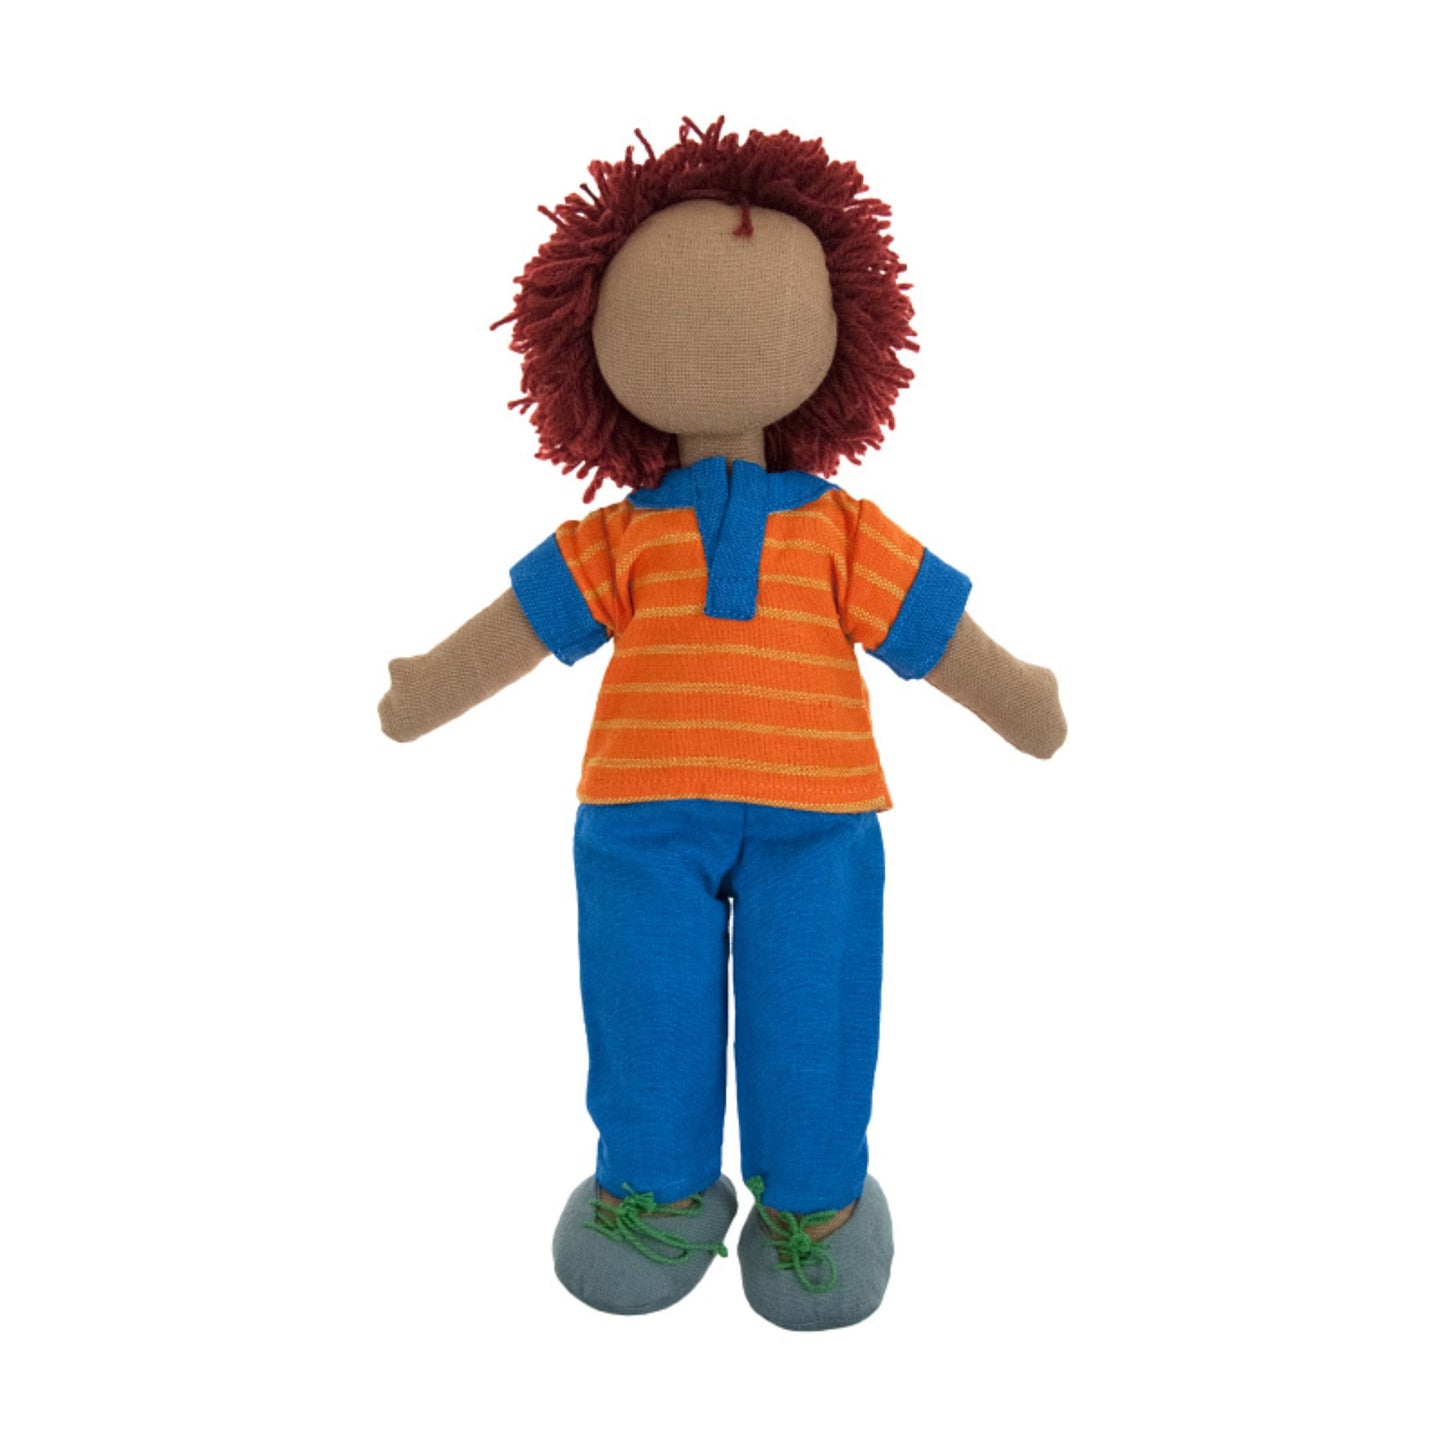 Ethical Toy Doll - Adam - Fair Trade cotton doll